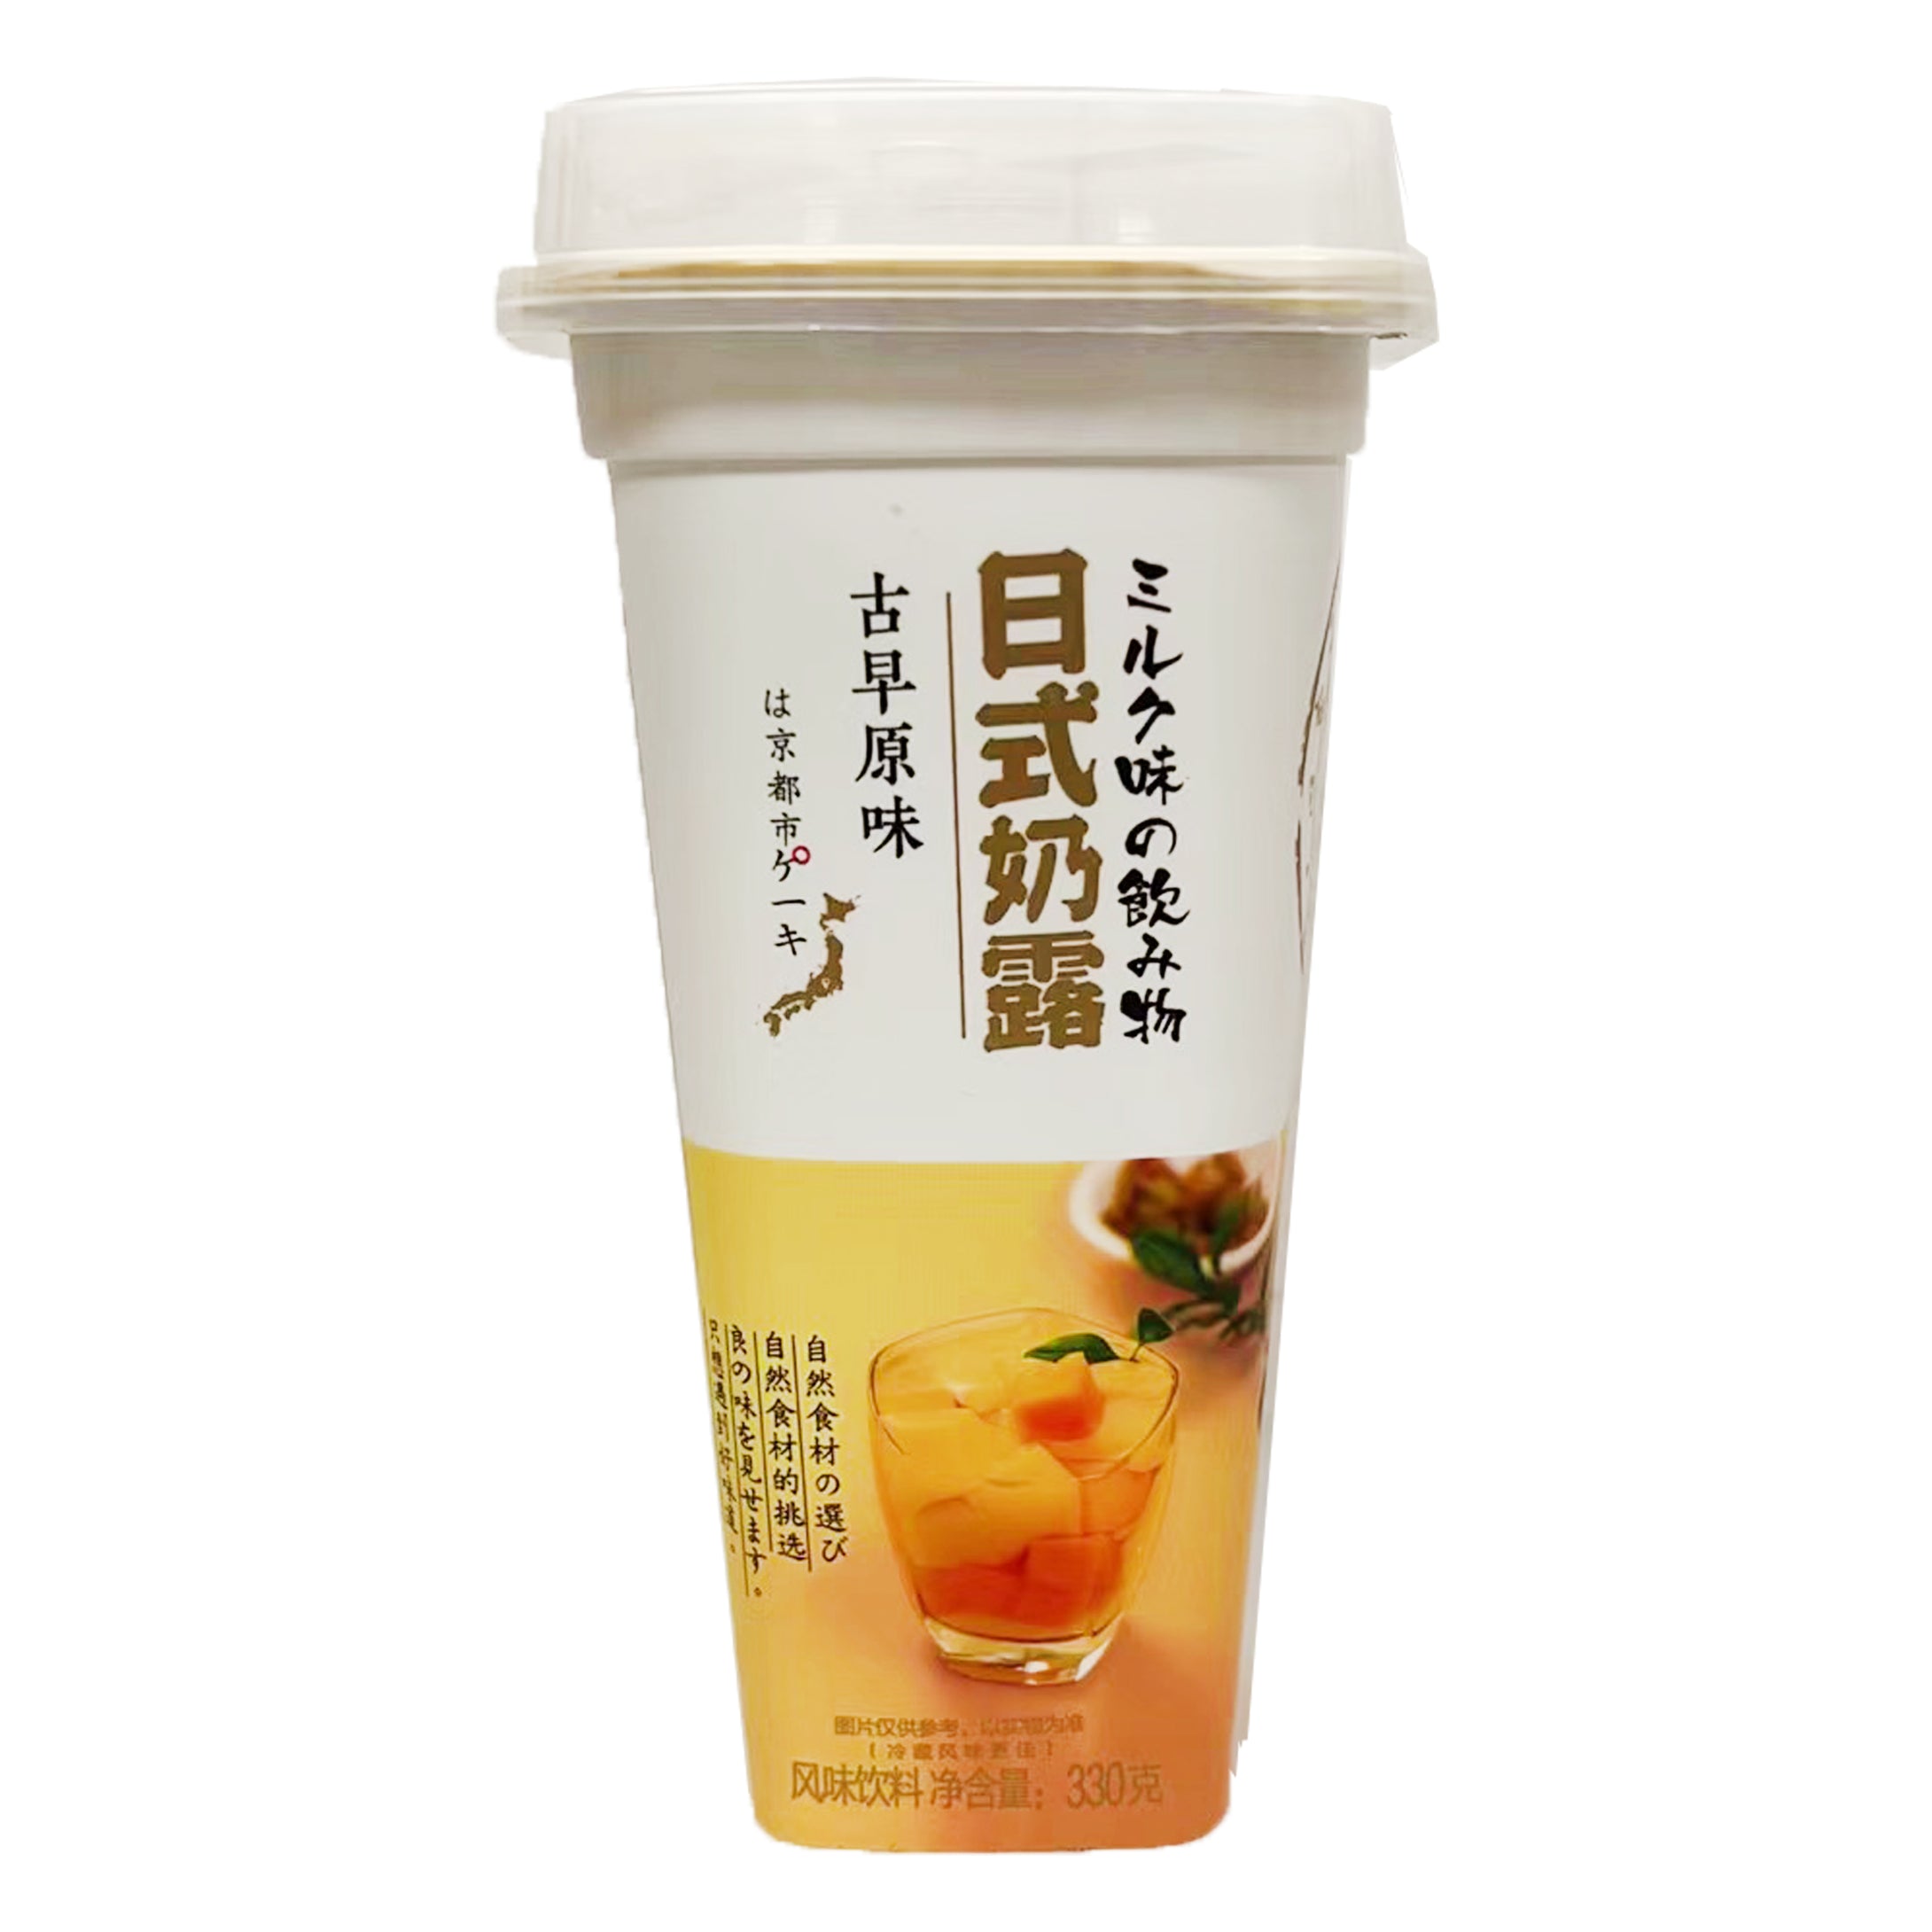 Du Li You Huo Japanese Pudding Original Flavour 330g~ 肚里诱惑 日式奶露 古早原味 330g